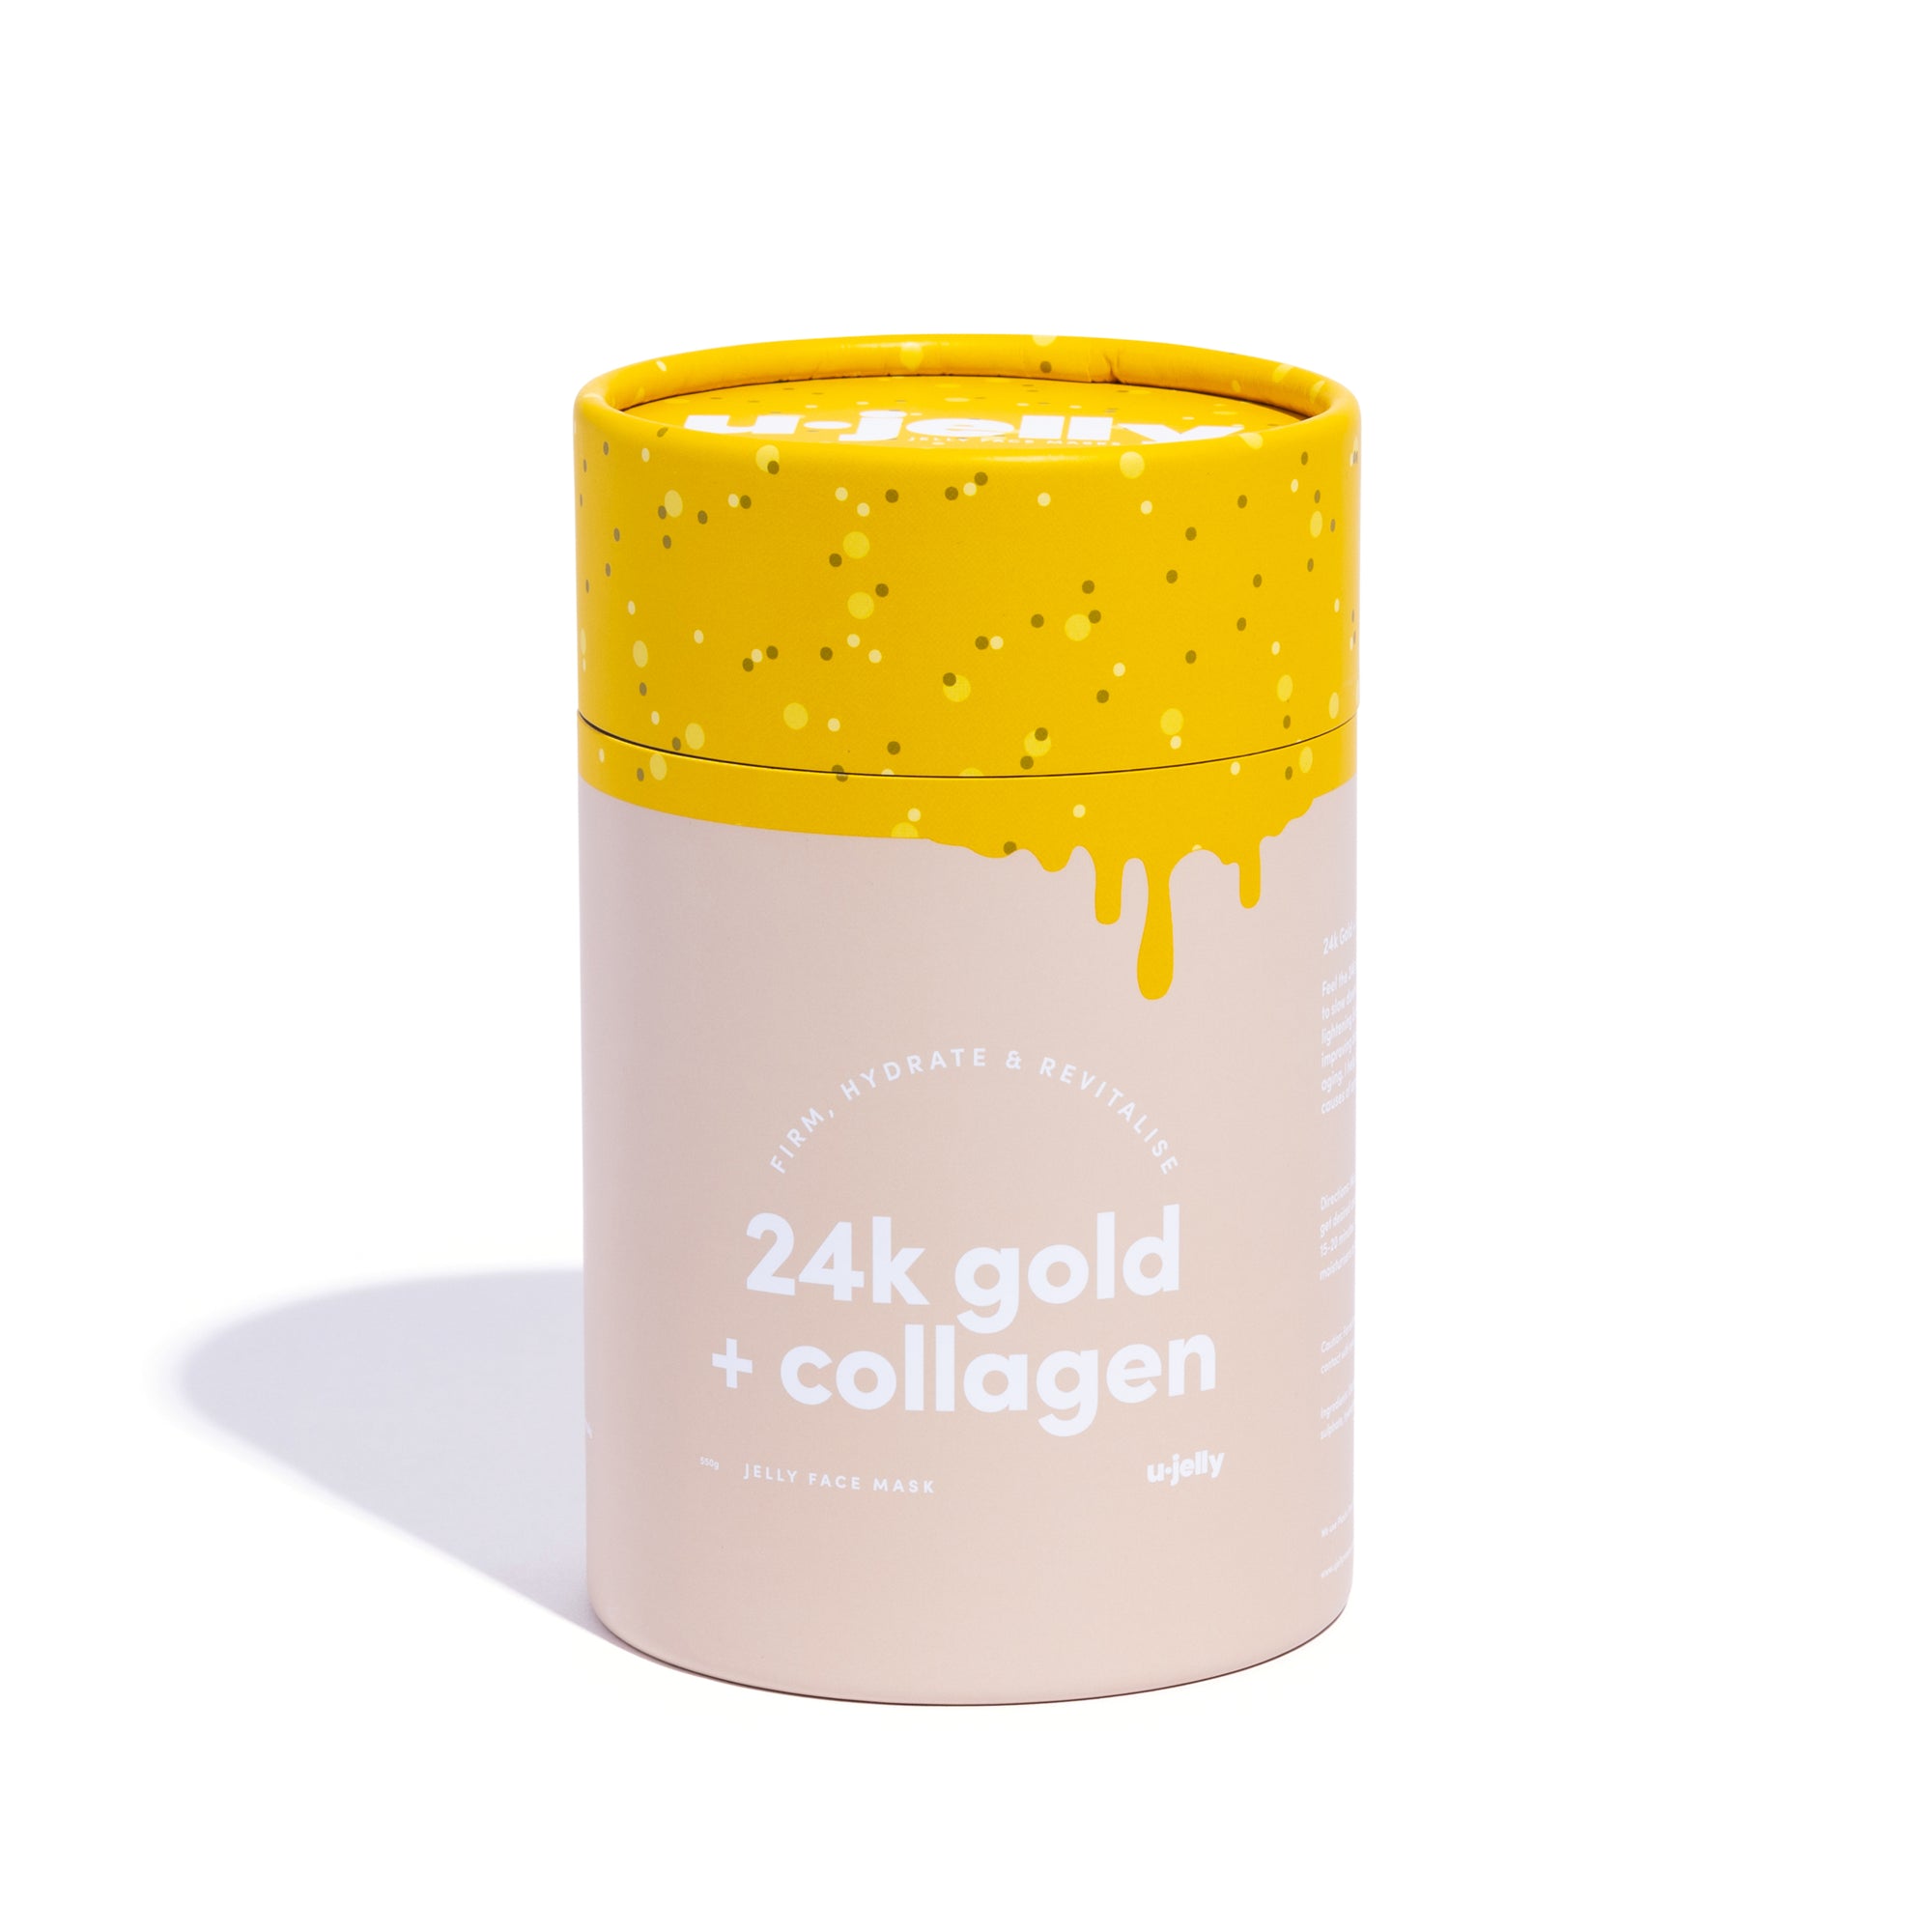 hydrojelly face masks - 24K gold + Collagen